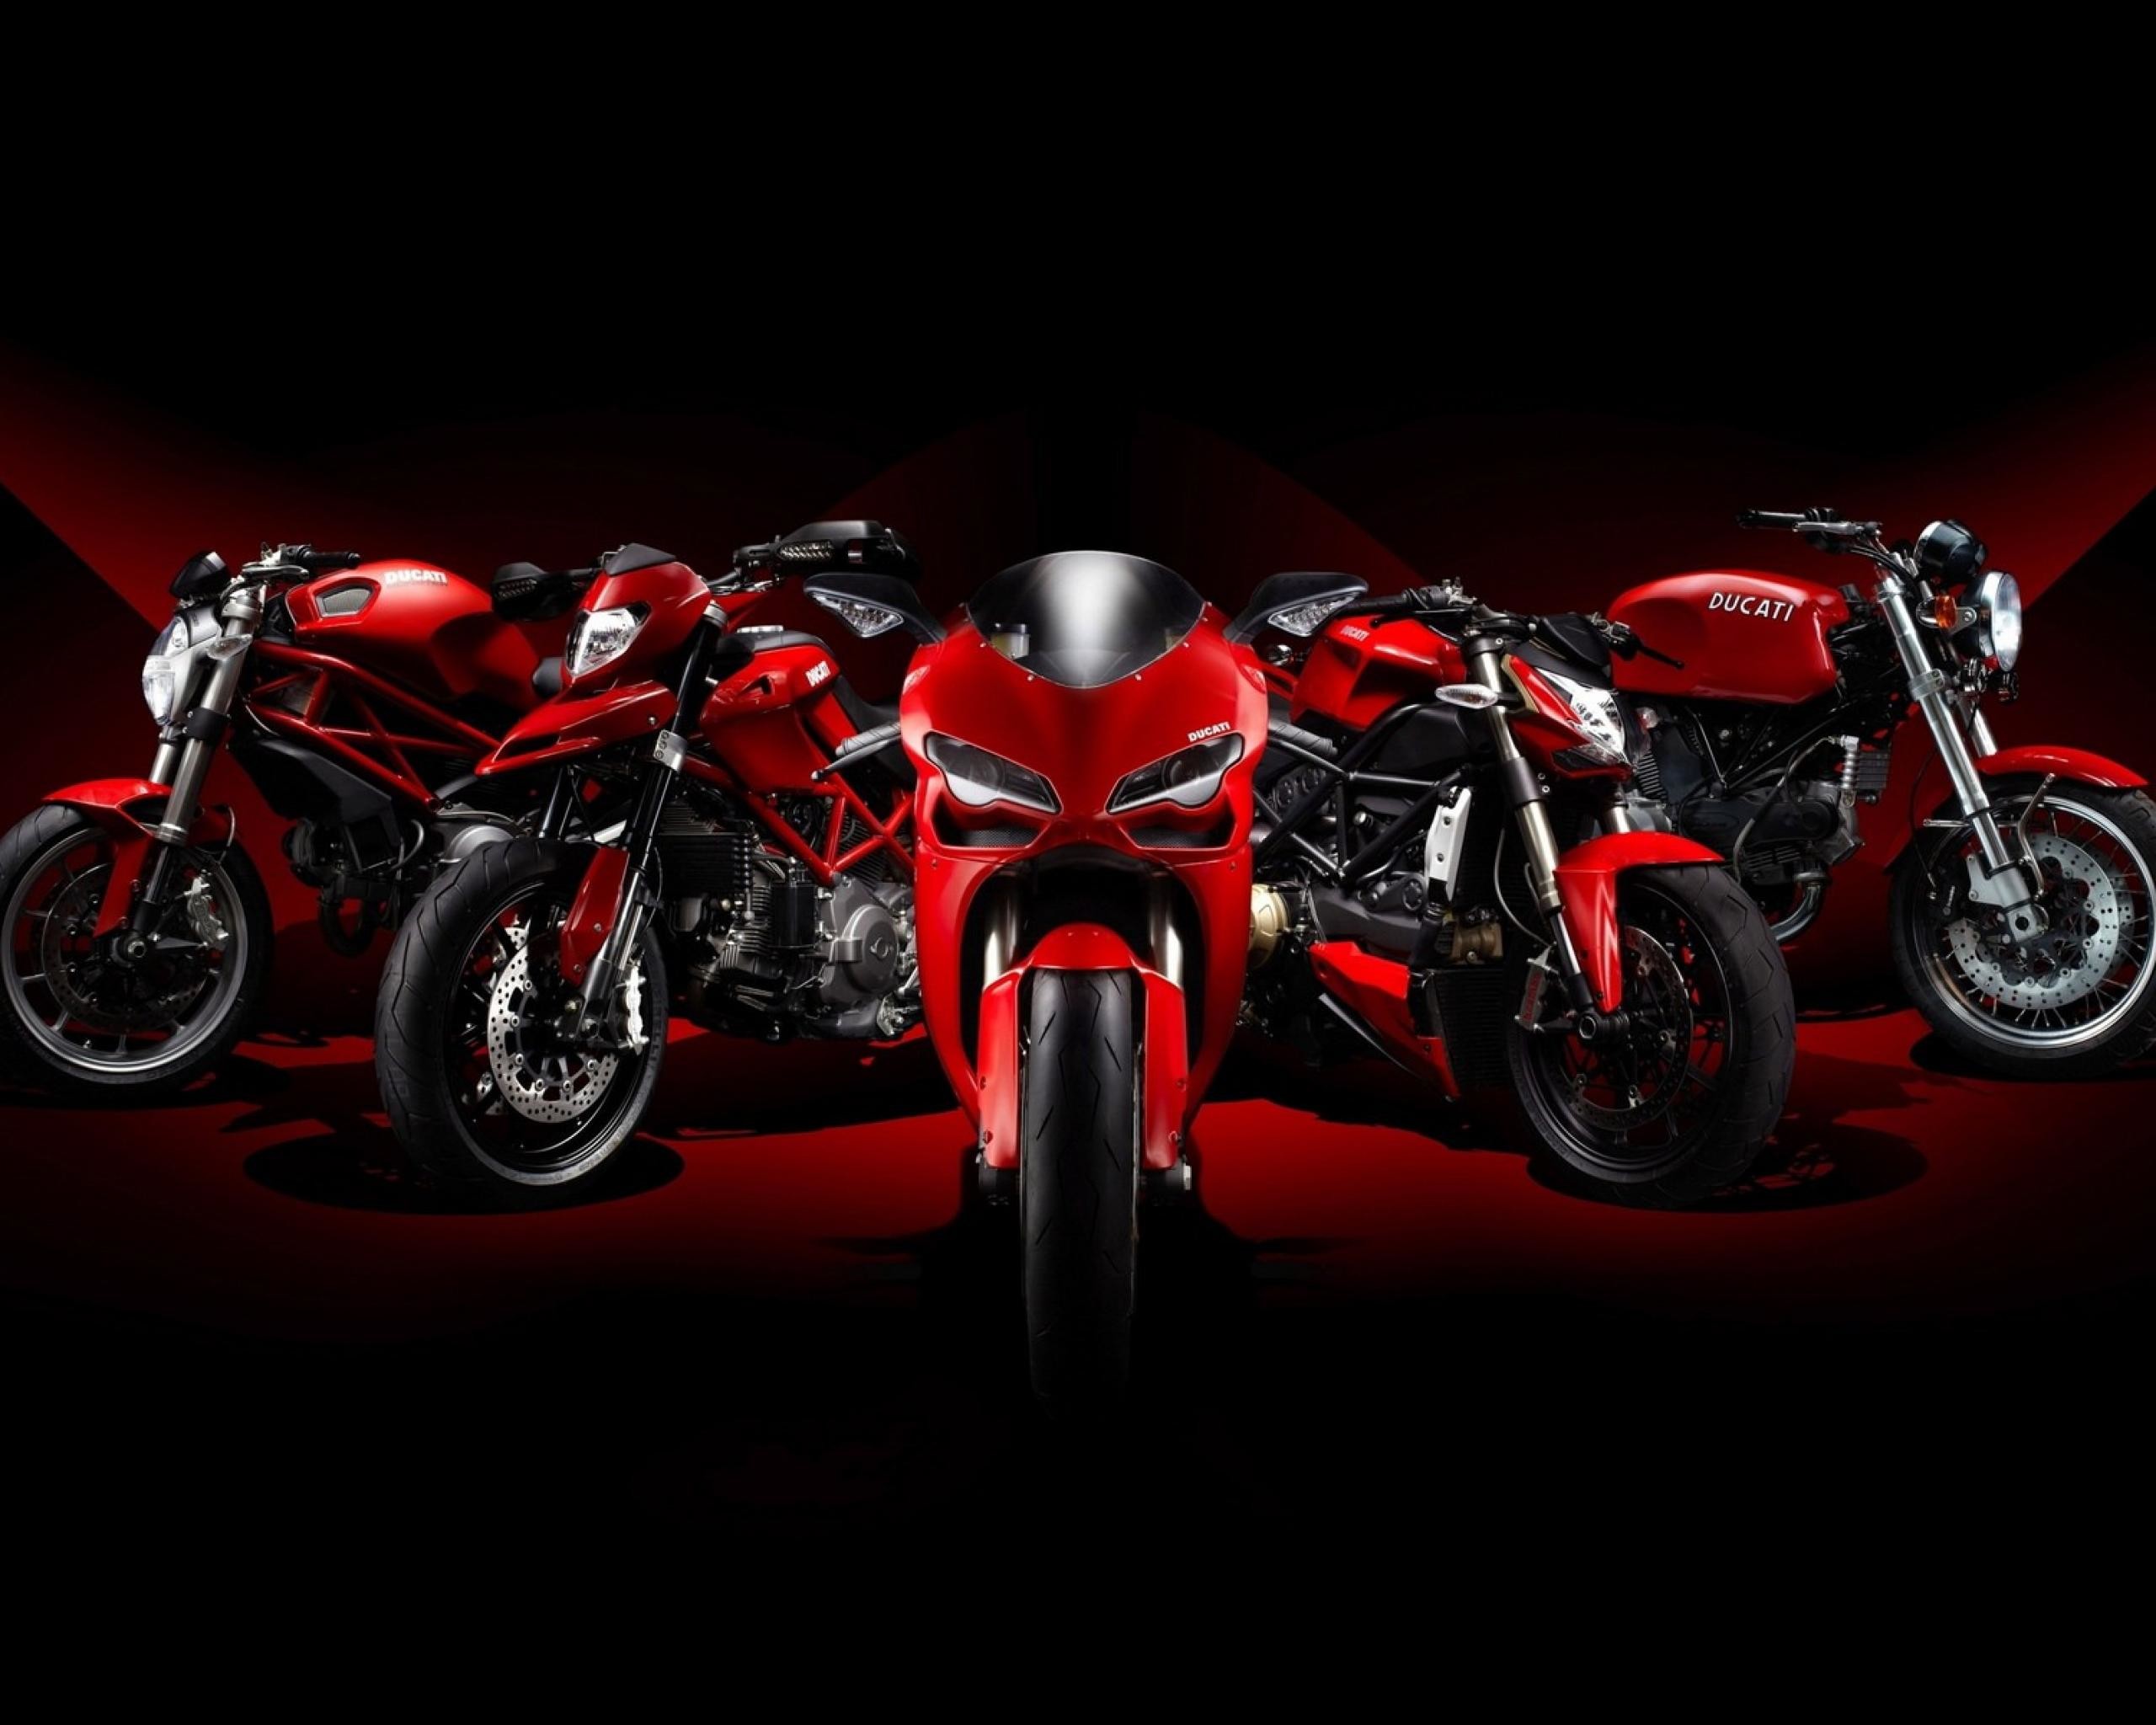 2560x2048 Motorcycle Wallpaper Hd : Wallpapers Ducati Hd Motorbikes .